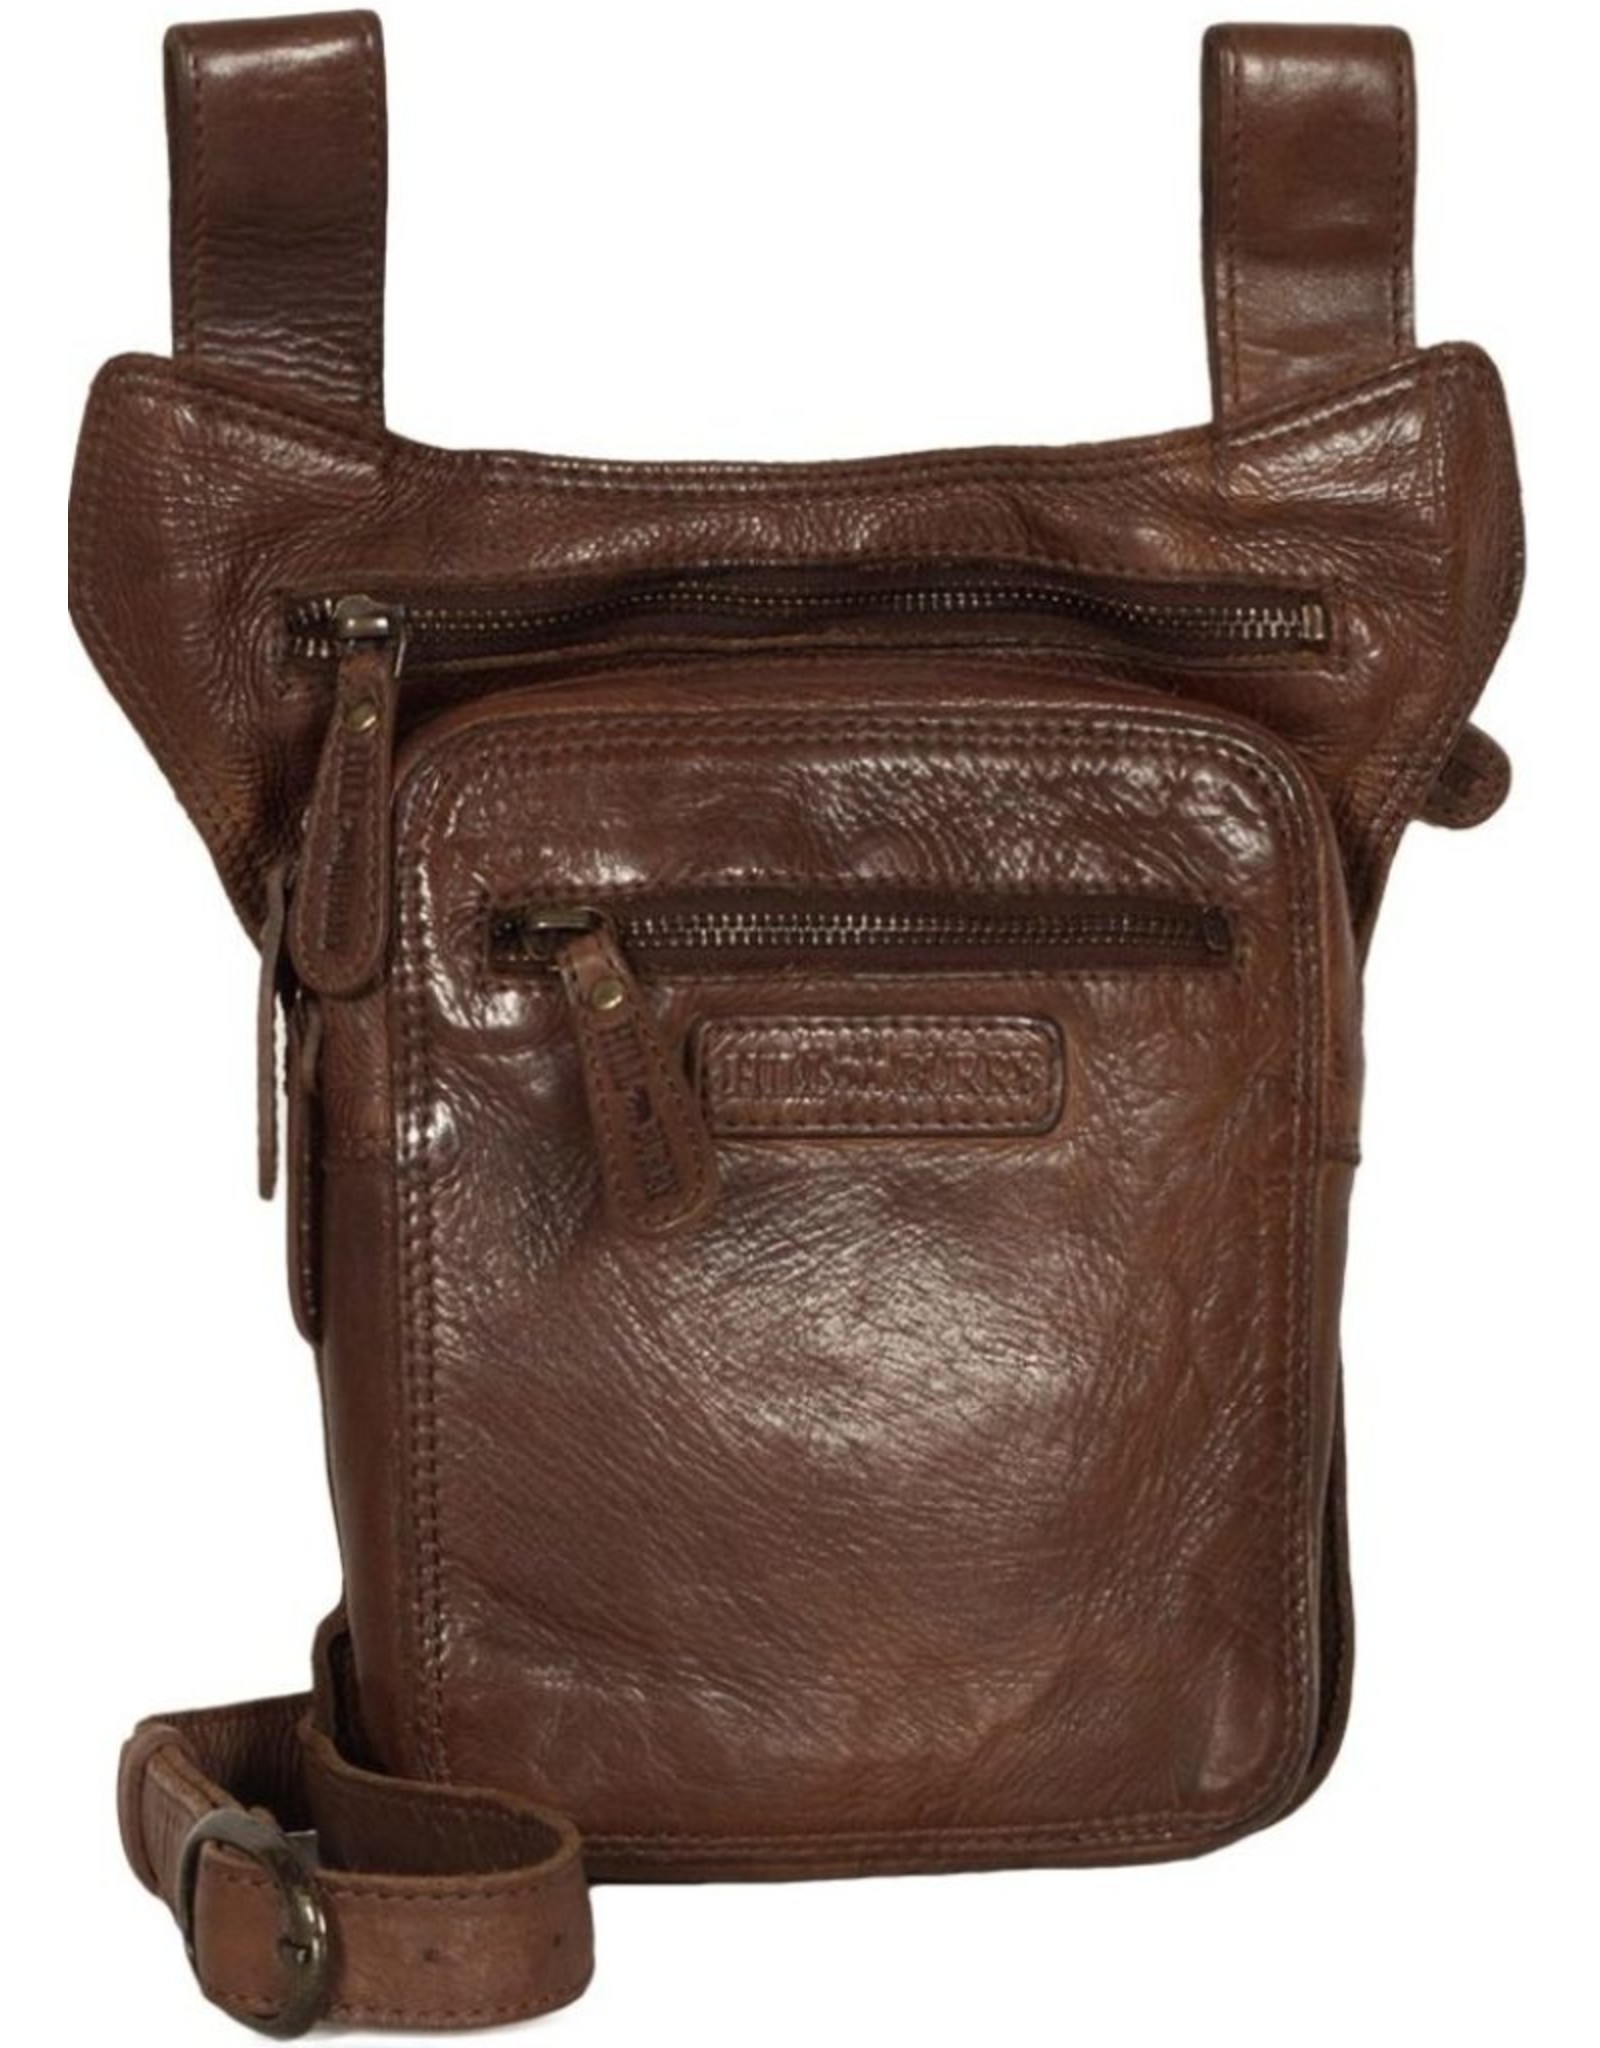 HillBurry Leather bags - HillBurry belt bag  leg bag washed leather brown